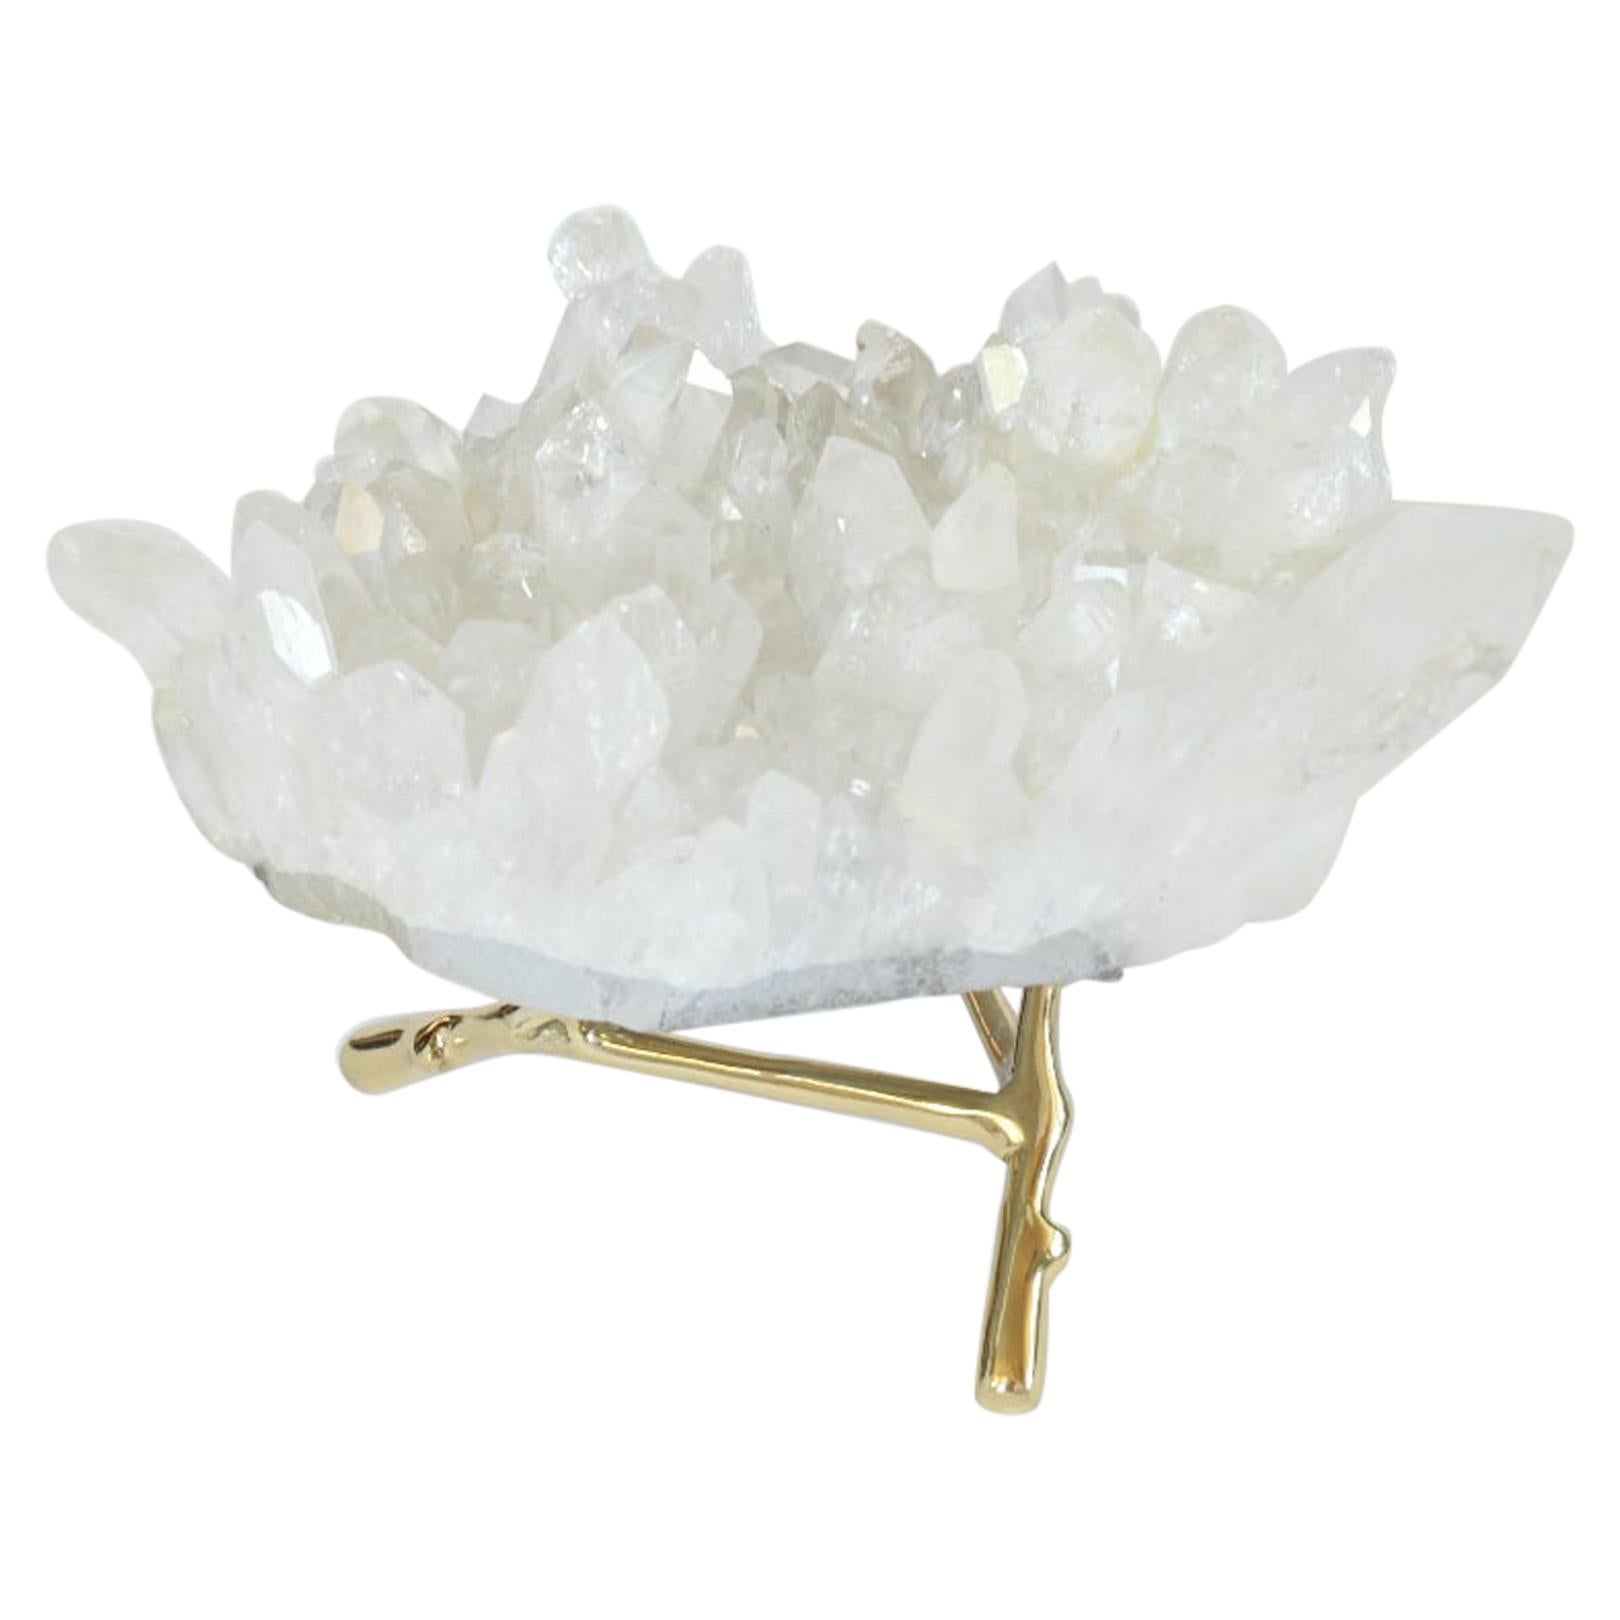 Natural Rock Crystal Quartz Sculpture For Sale